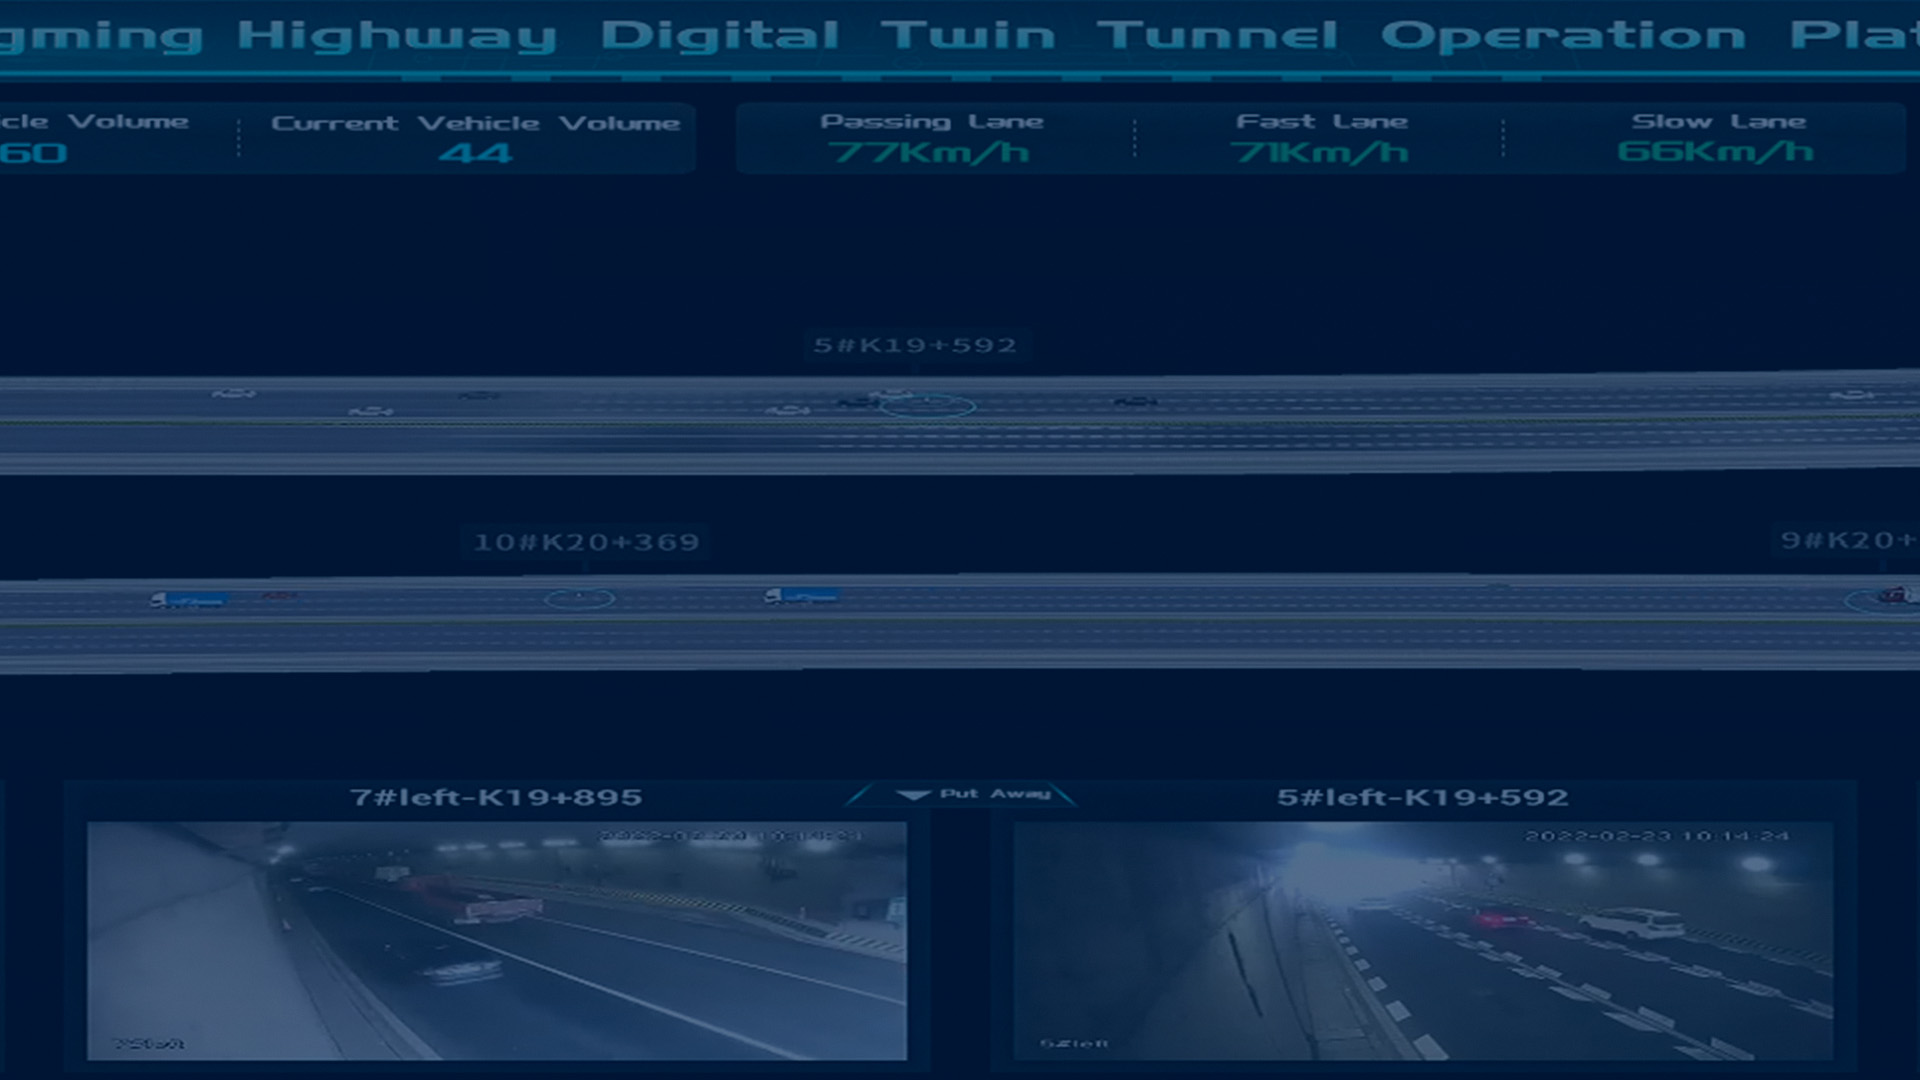 Digital Tunnel Solution